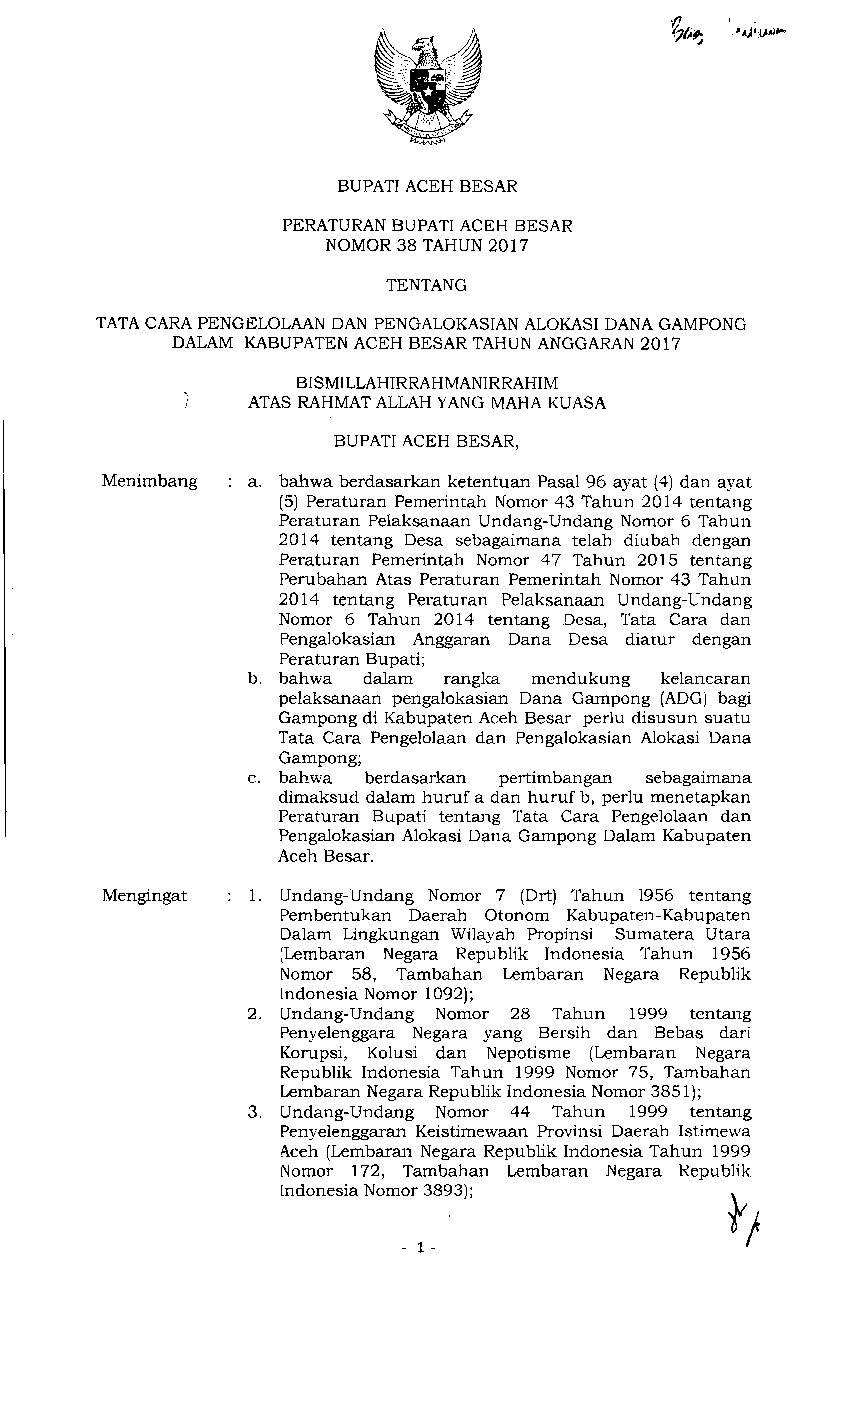 Peraturan Bupati Aceh Besar No 38 tahun 2017 tentang Tata Cara Pengelolaan Dan Pengalokasian Alokasi Dana Gampong Dalam Kabupaten Aceh Besar Tahun Anggaran 2017